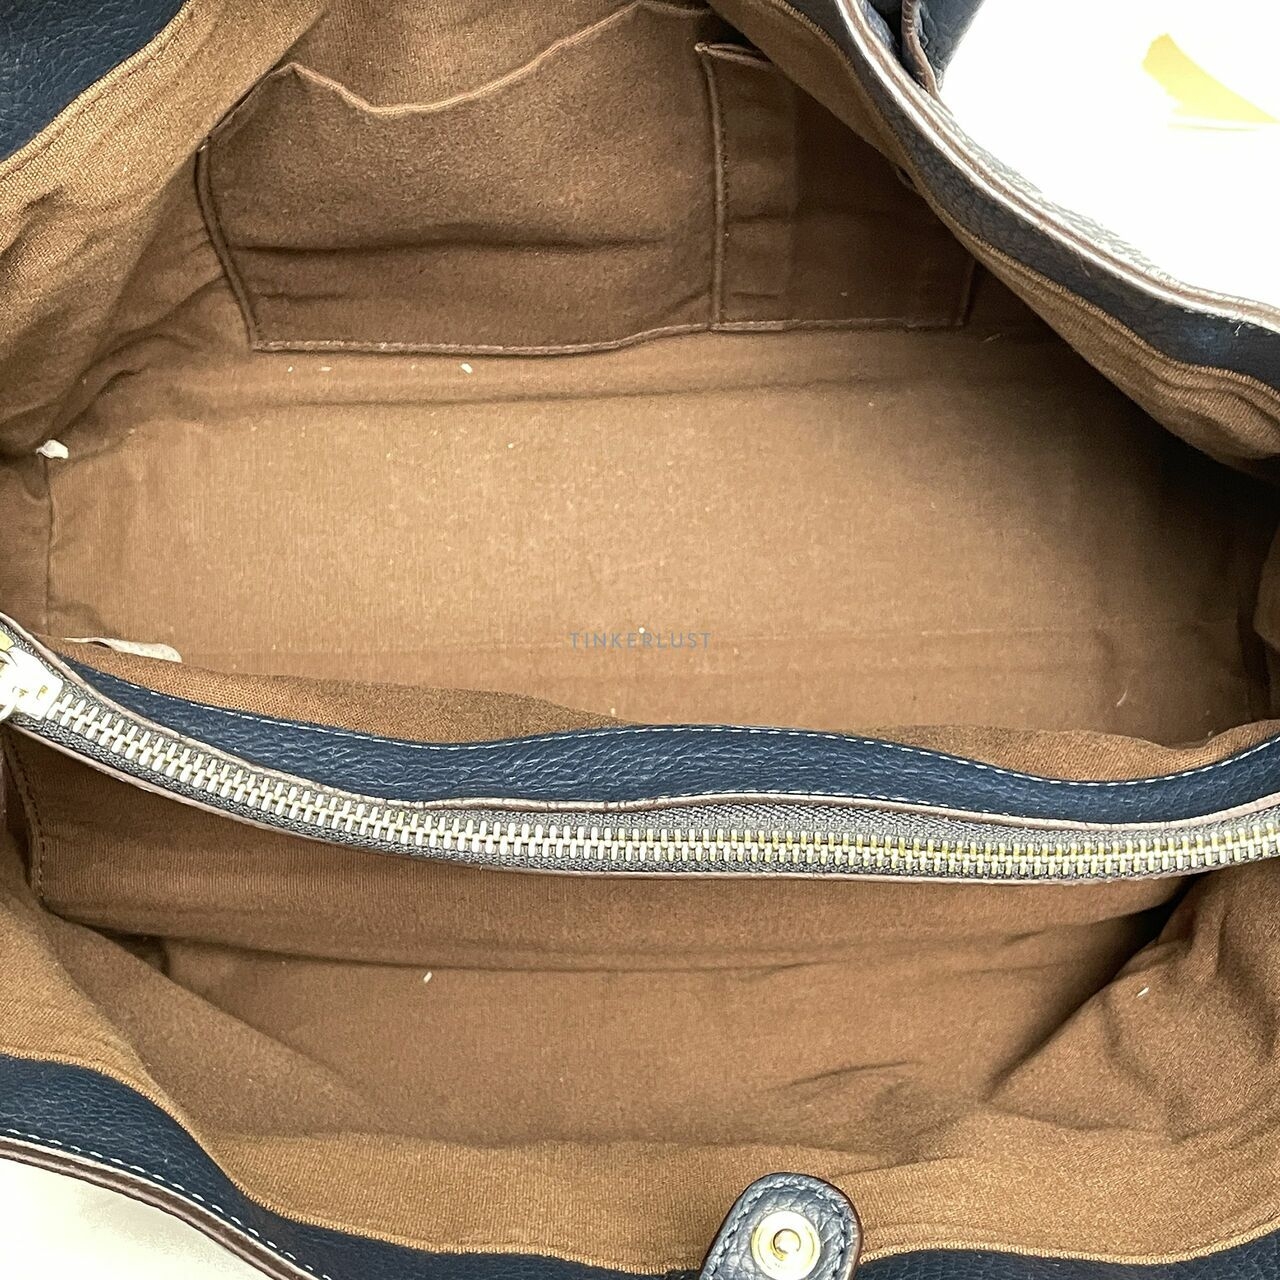 Rabeanco Navy Handbag